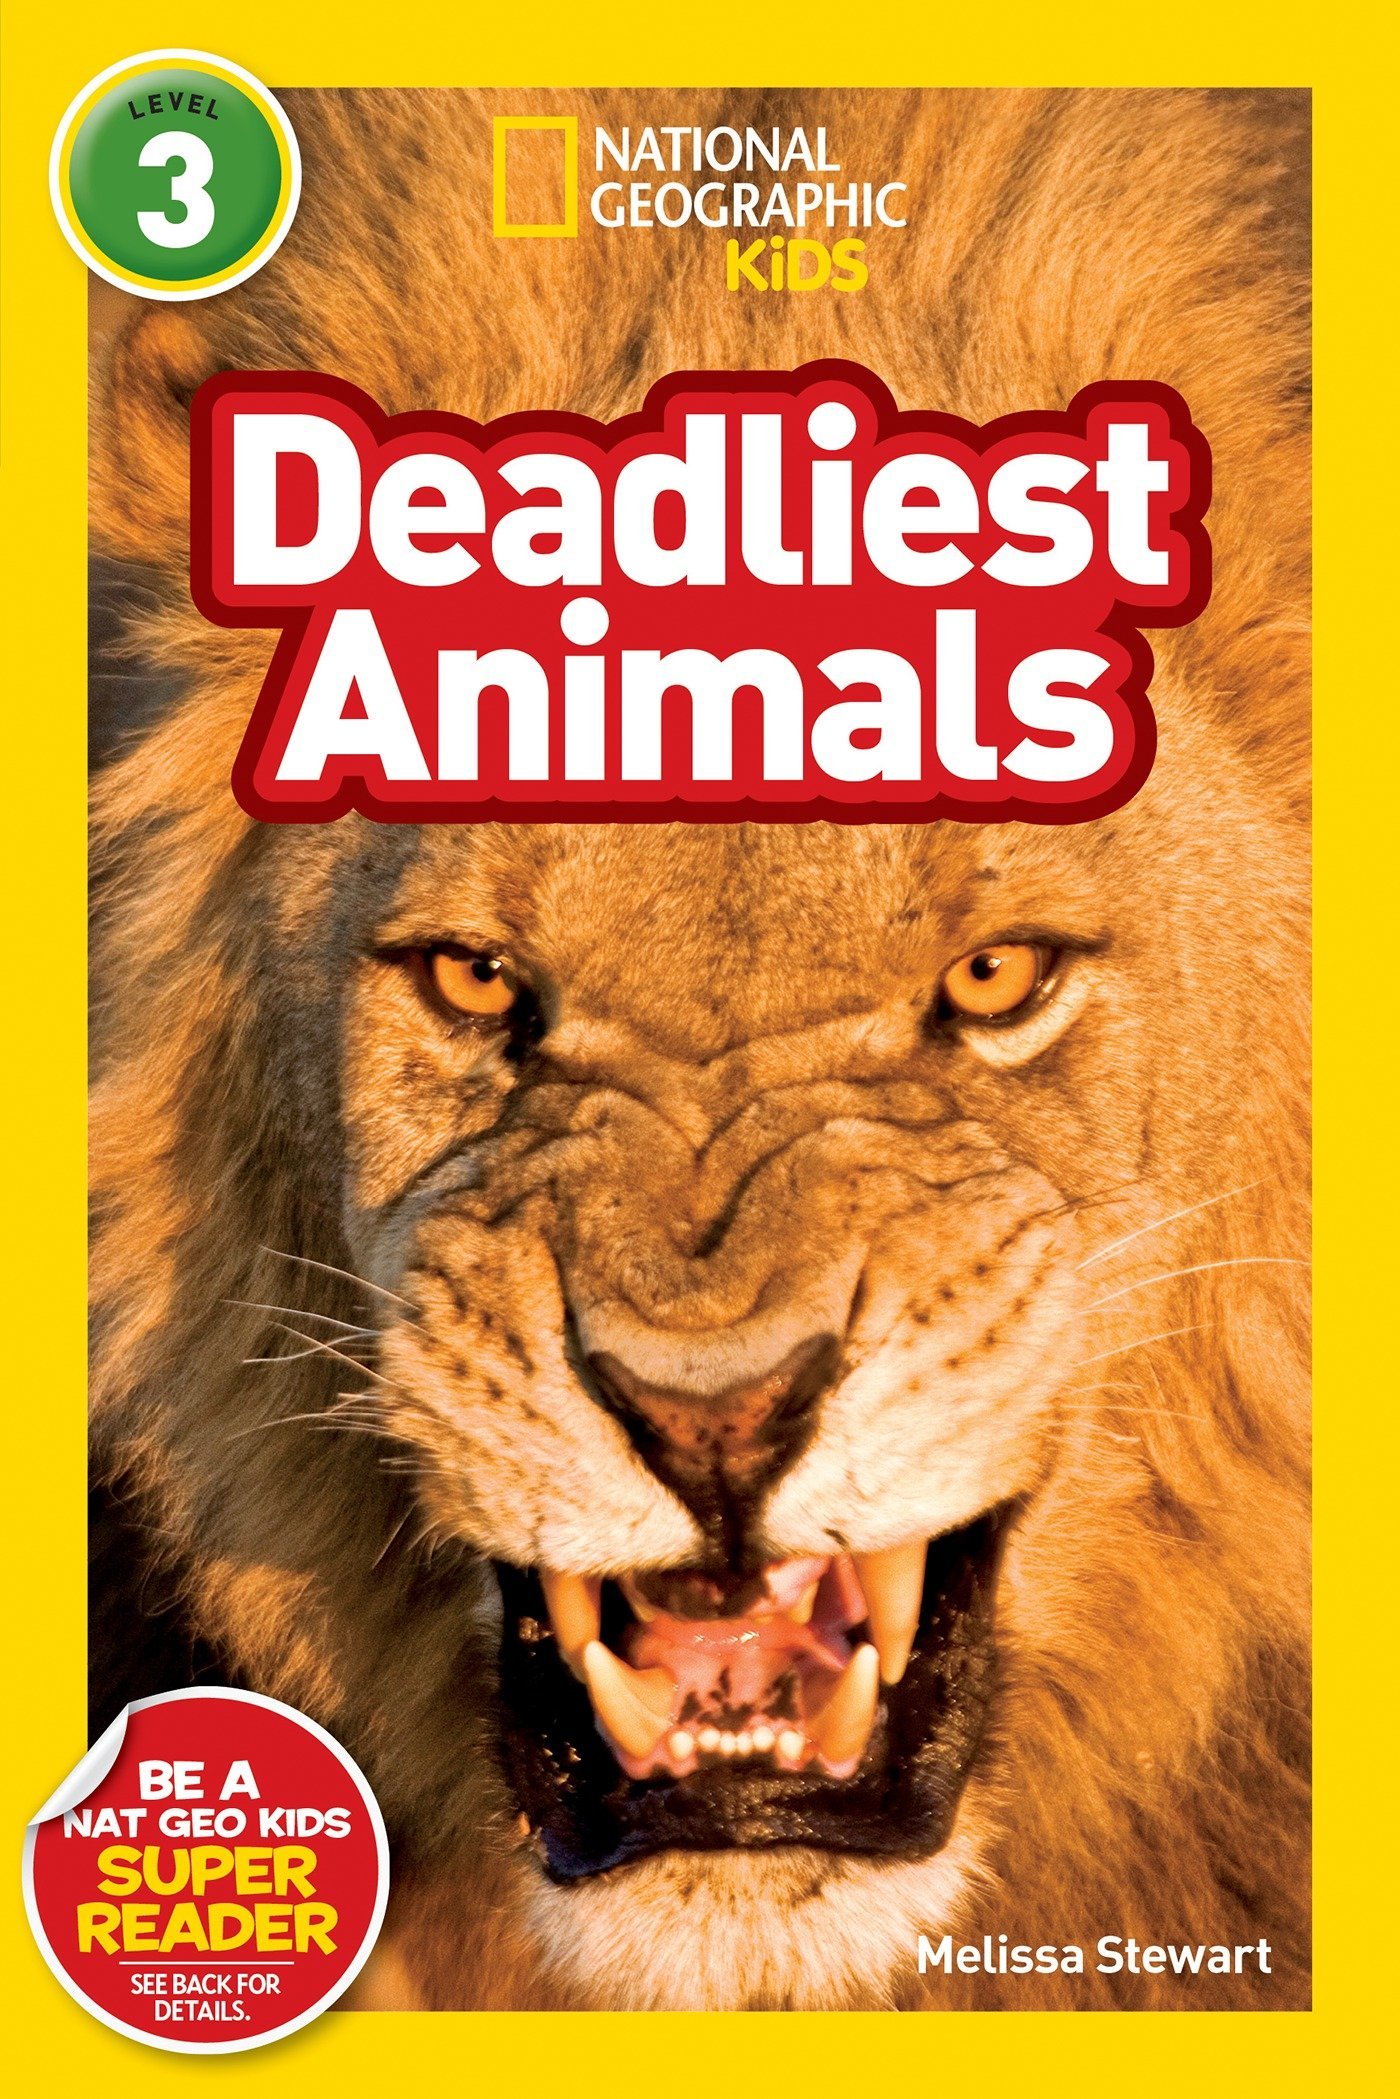 National Geographic Kids: Deadliest Animals